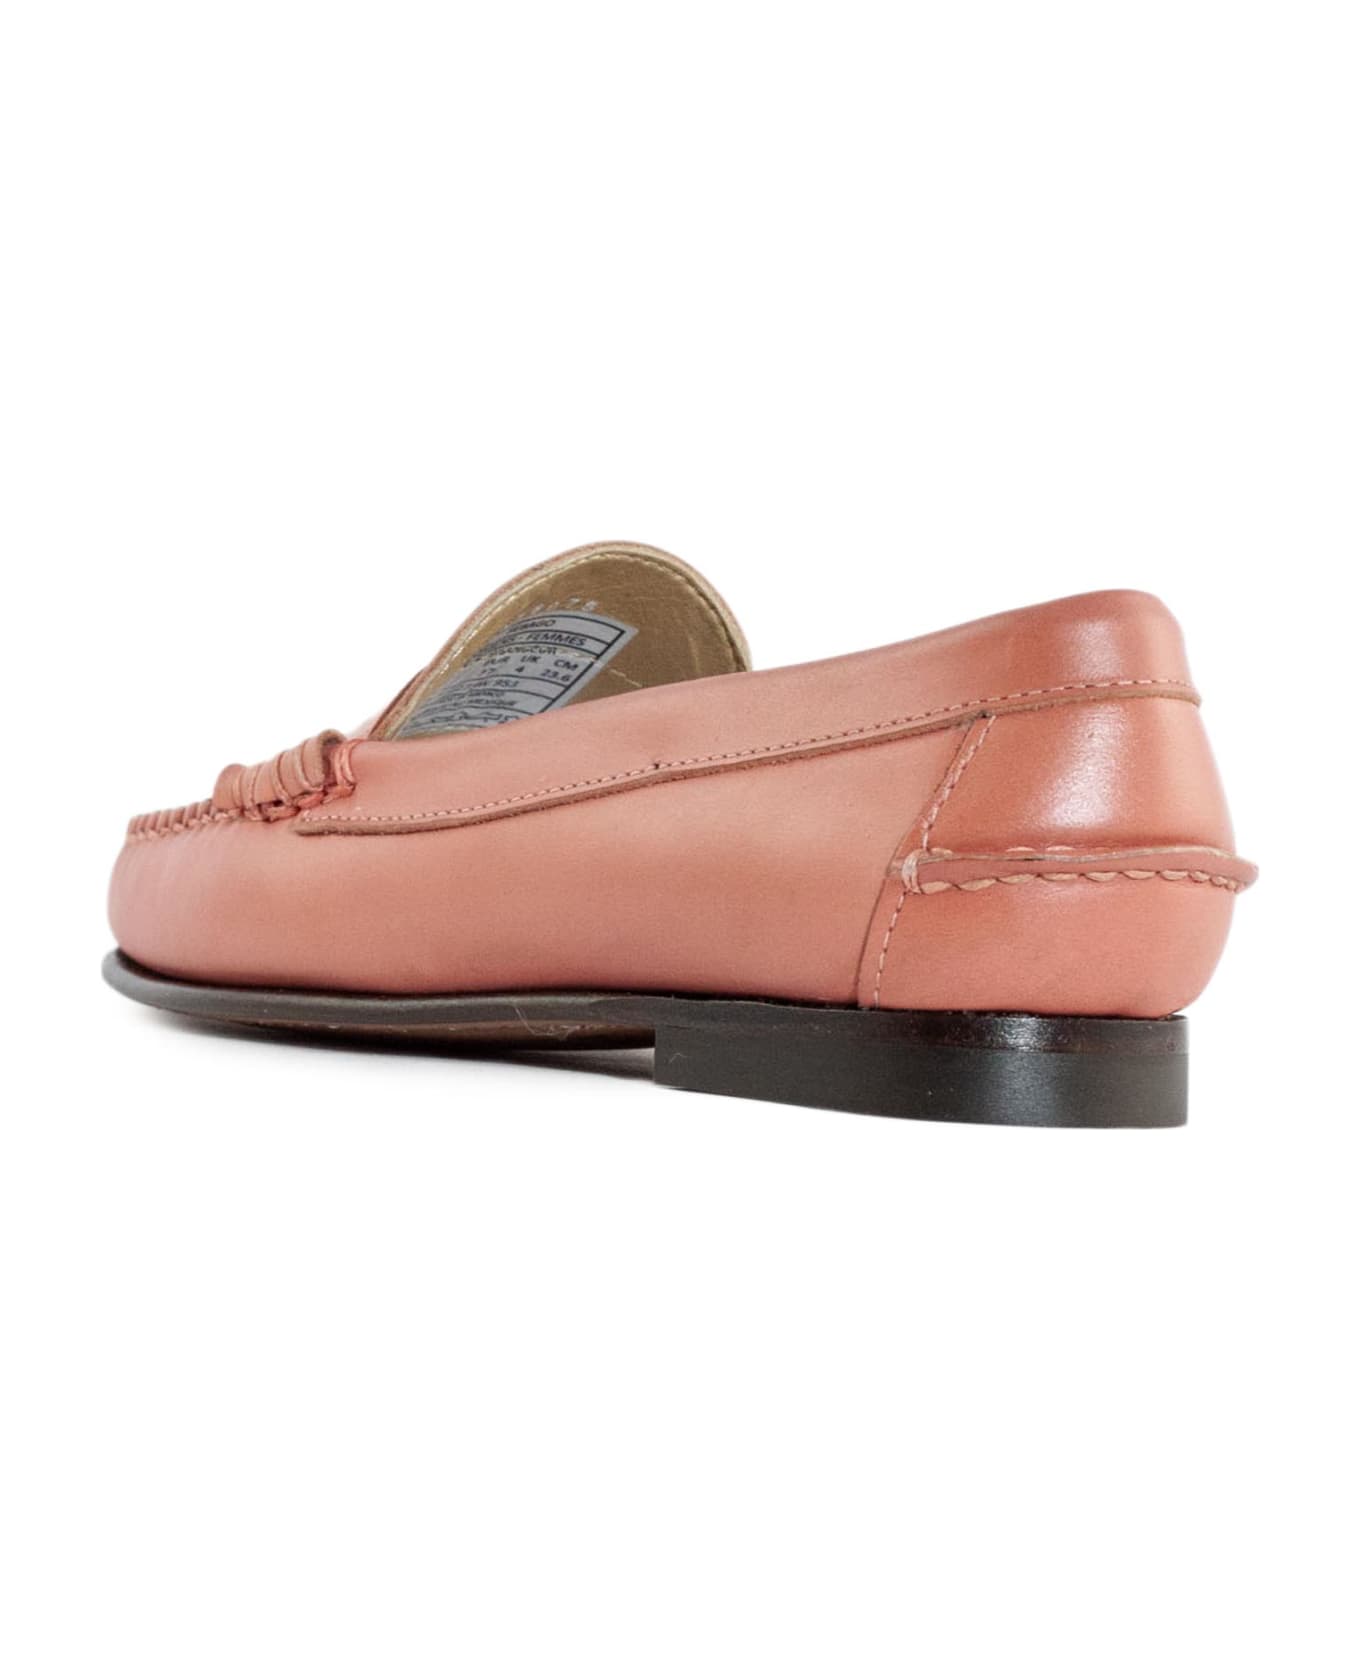 Sebago Pink Smooth Grain Leather Loafer - Pink